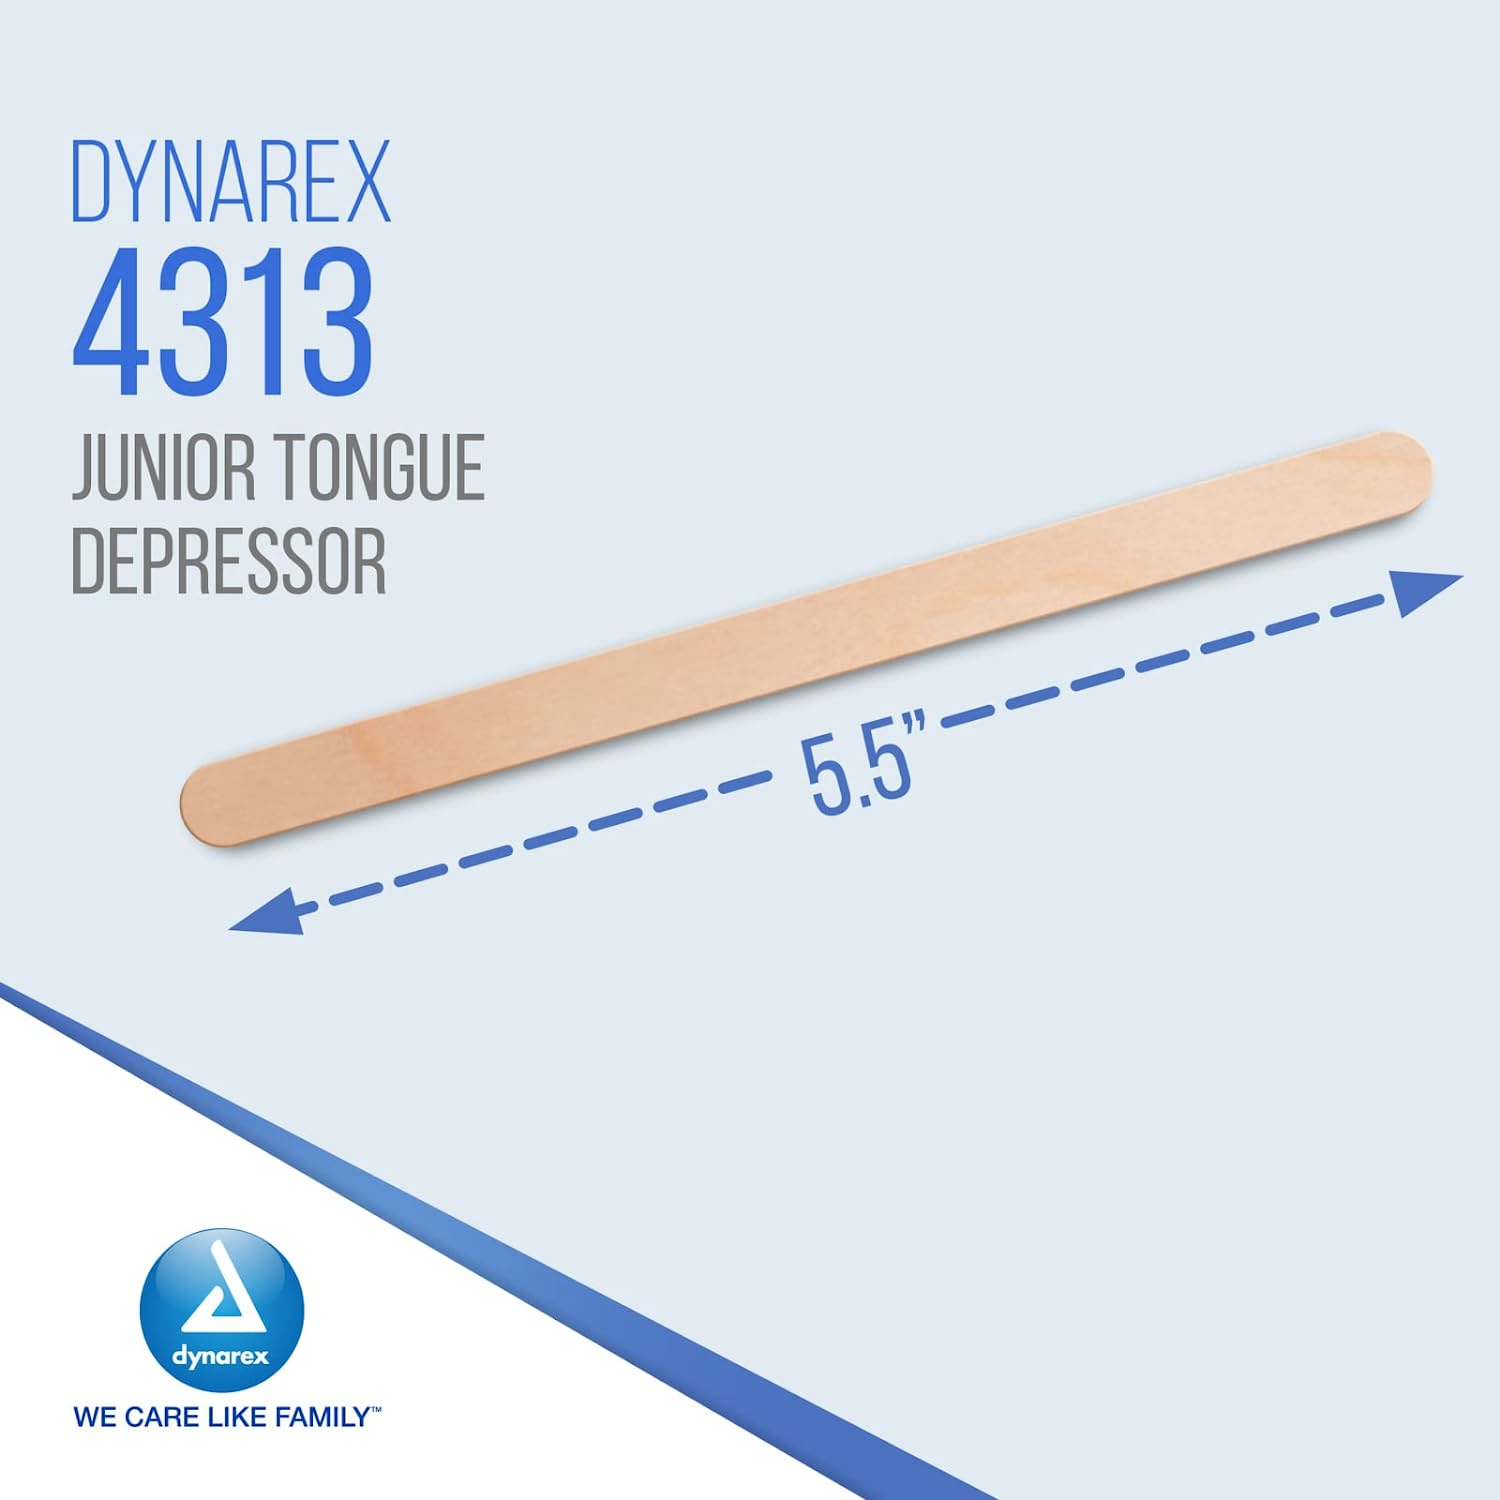 Dynarex Tongue Depressors, Sterile, 5.5